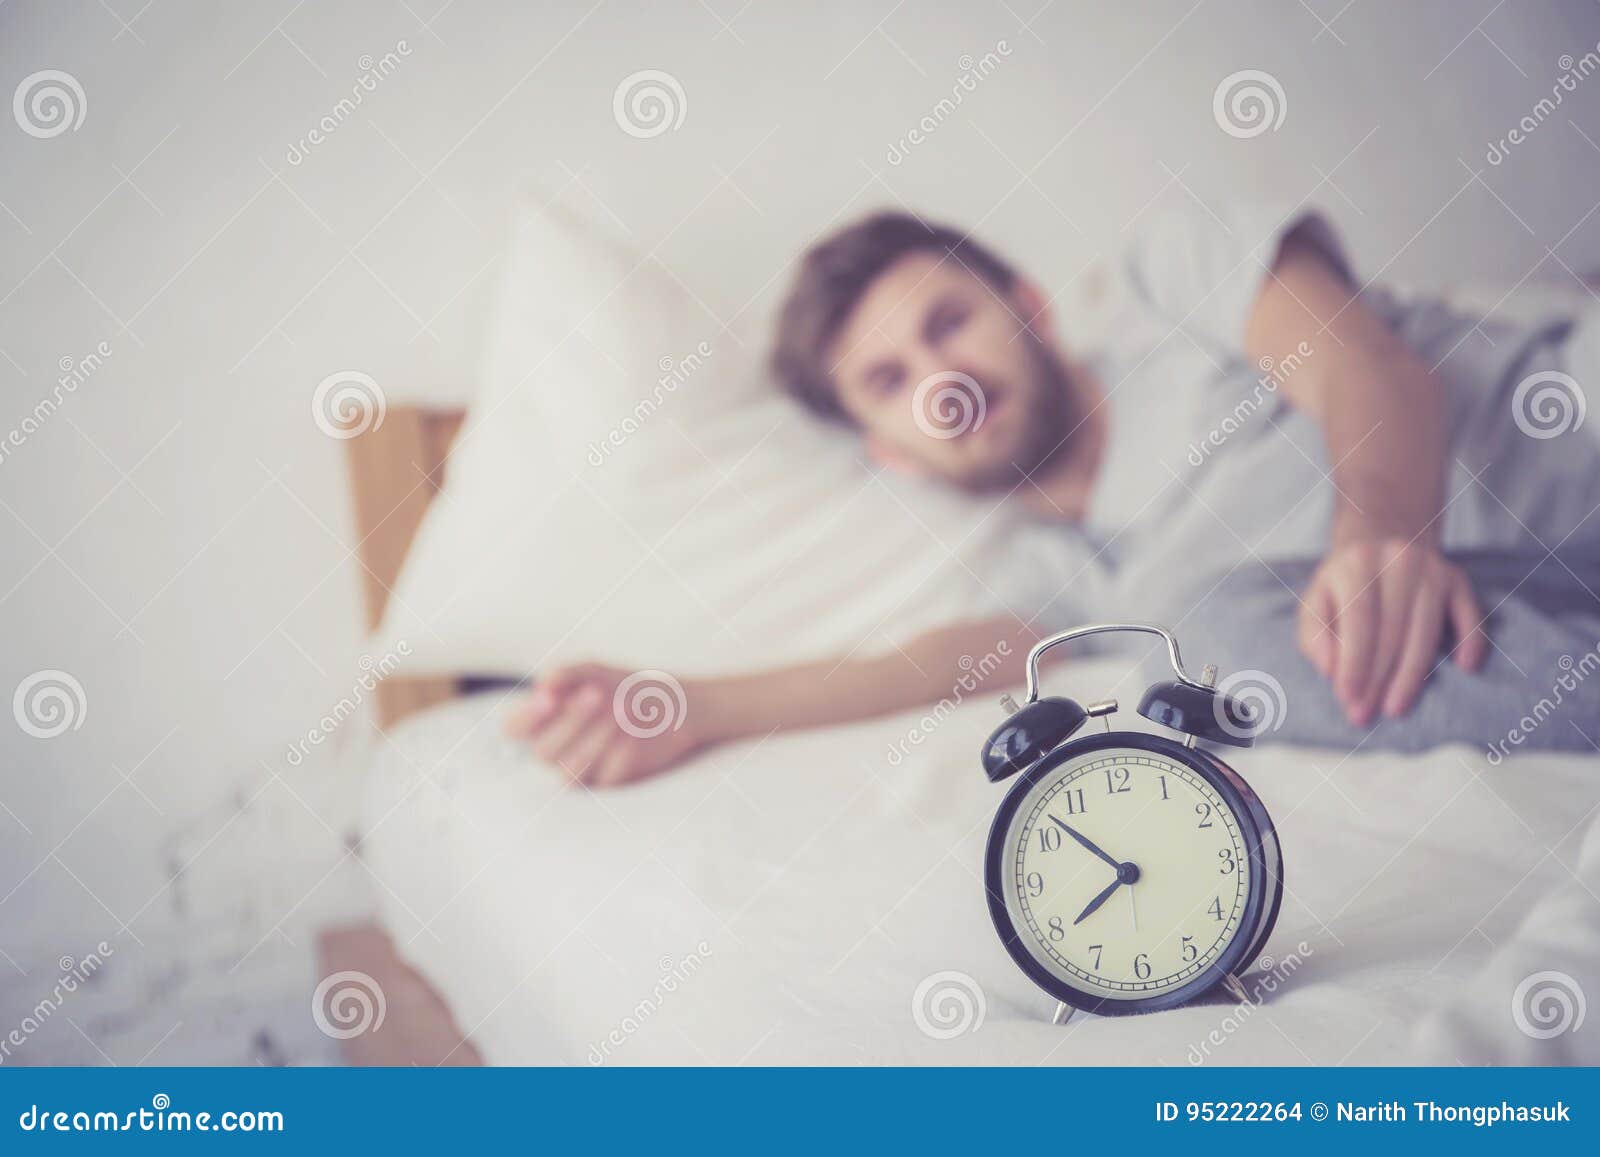 Man Sleepy Nationality American Reaching For The Alarm Clock Sleep